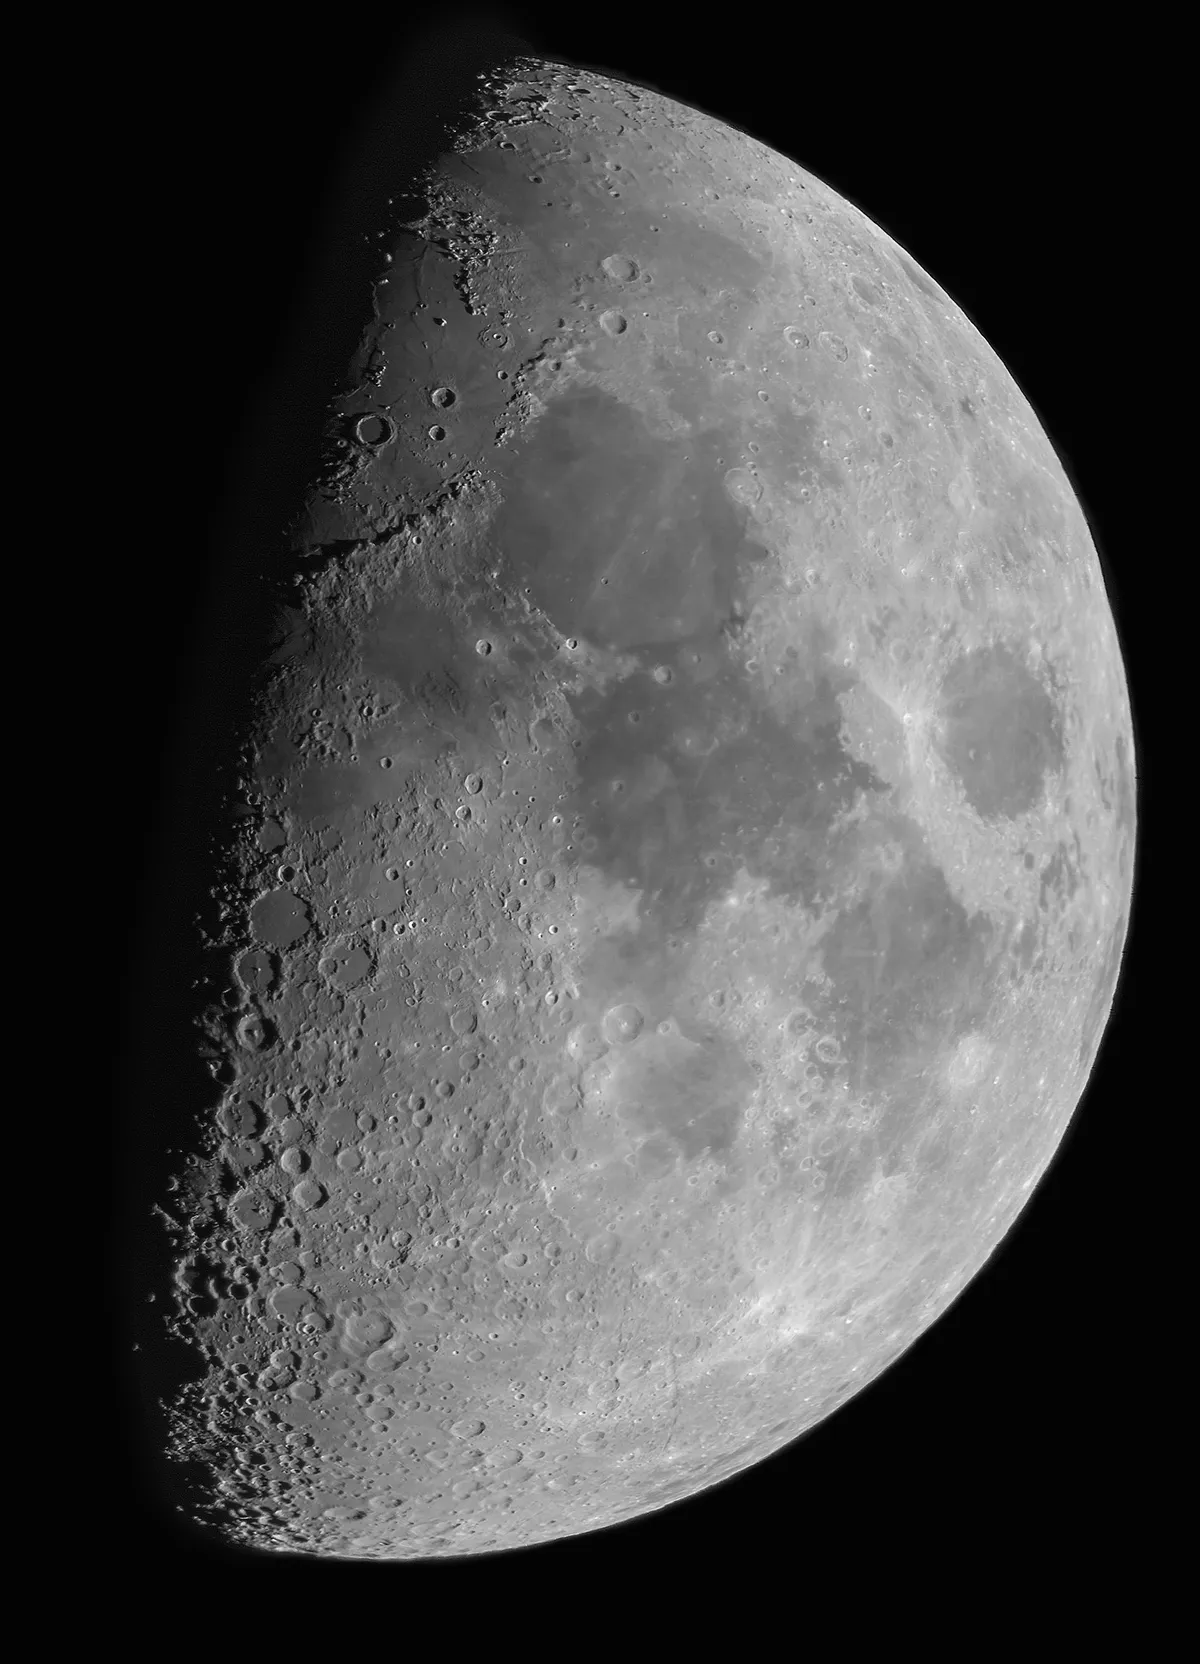 Moon Mosaic by John Short, Whitburn, Tyne and Wear, UK. Equipment: Canon 70, Celestron 8SE, Hyperion 8mm-24mm eyepiece.